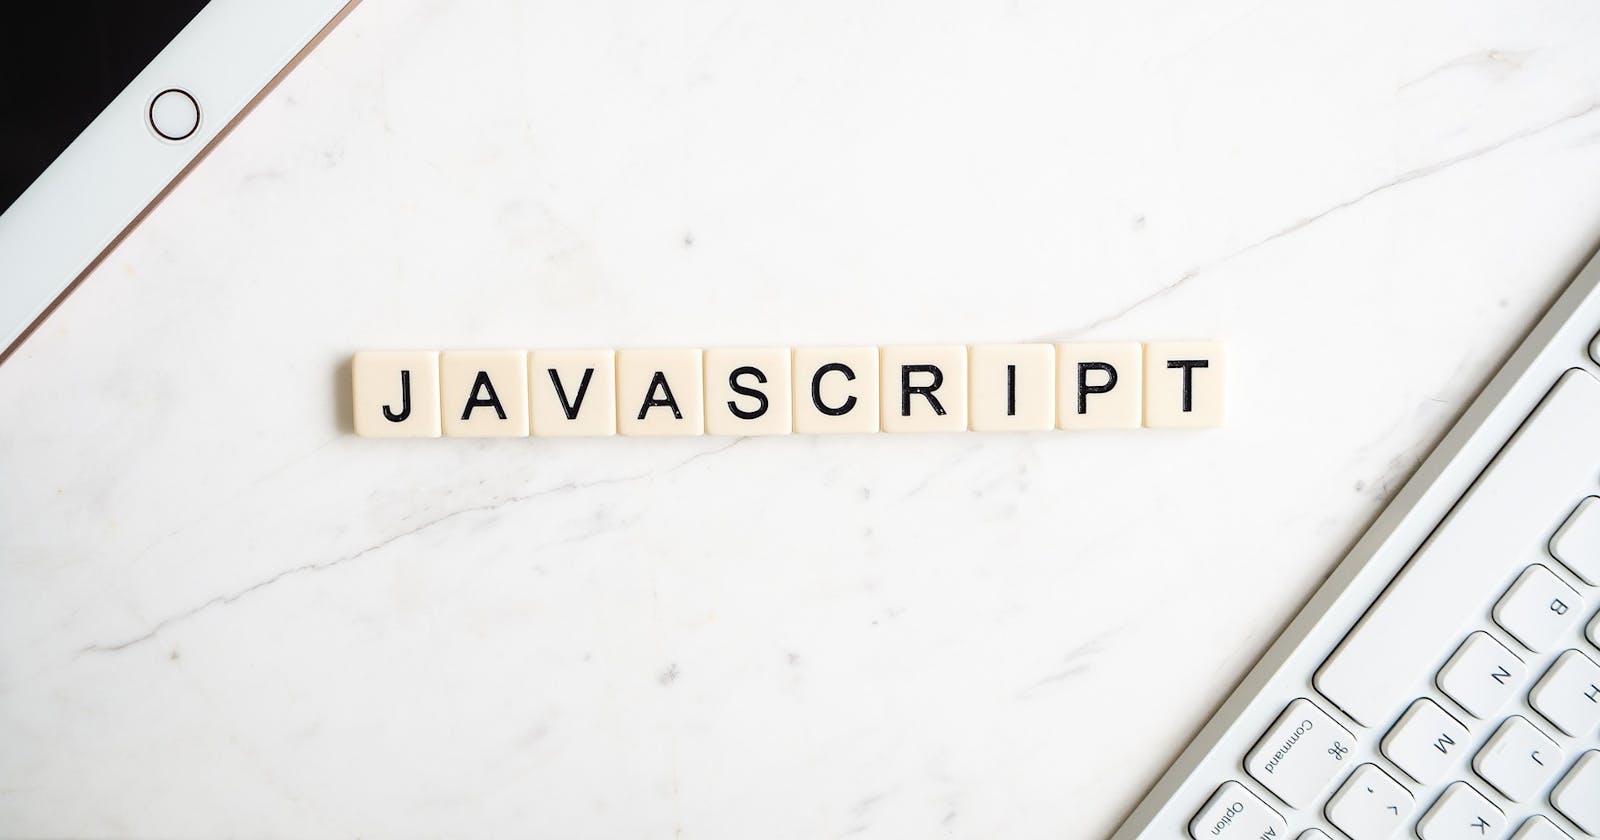 Reviewing Eloquent Javascript #Chpt3